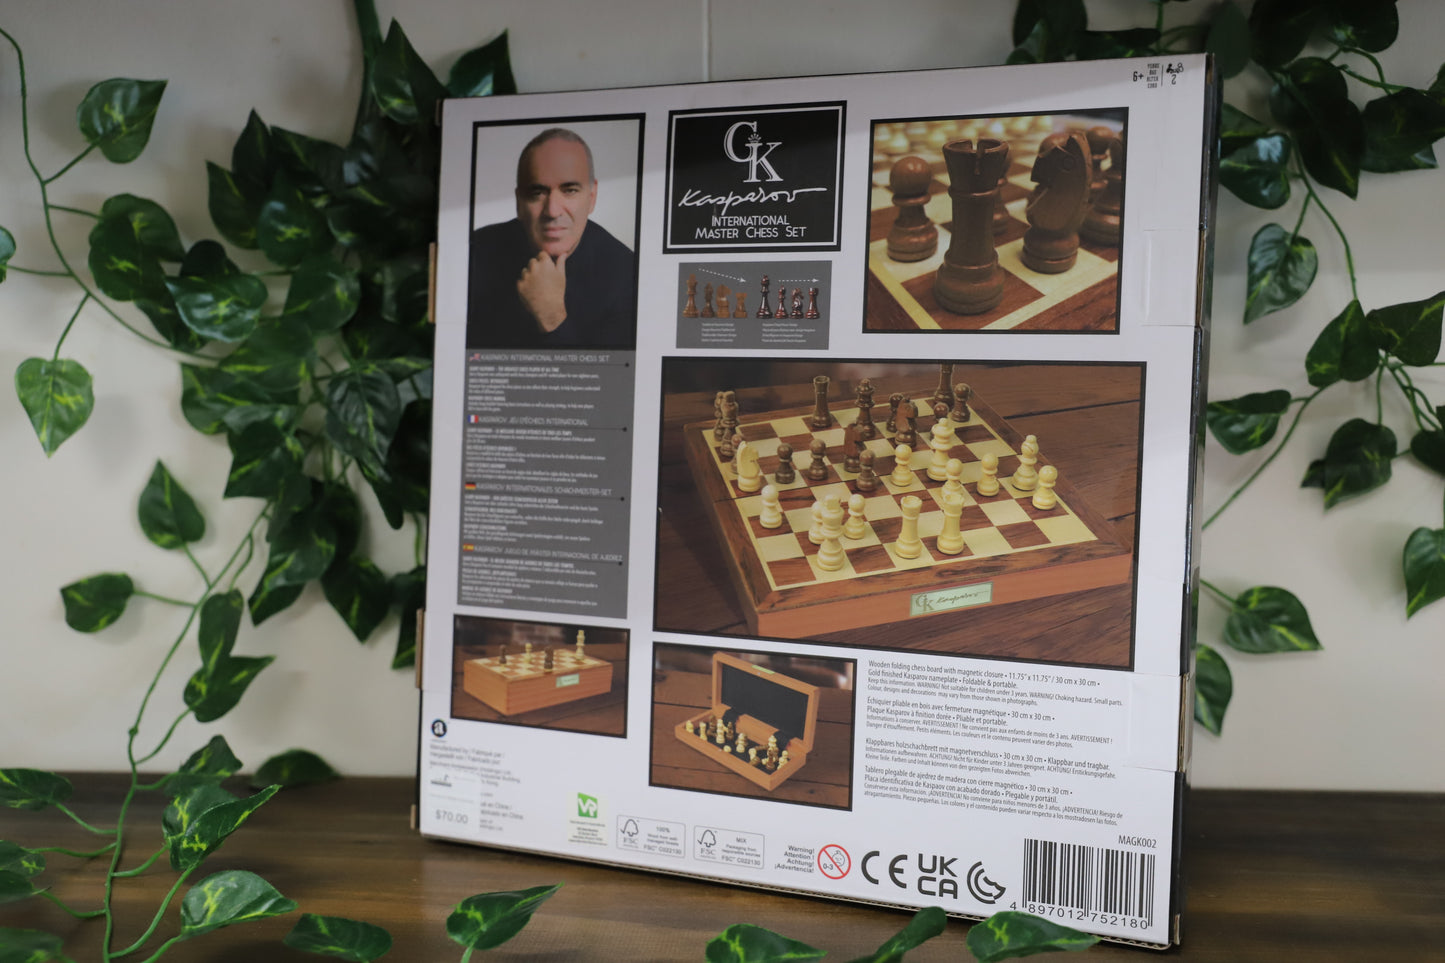 International Master Chess Set